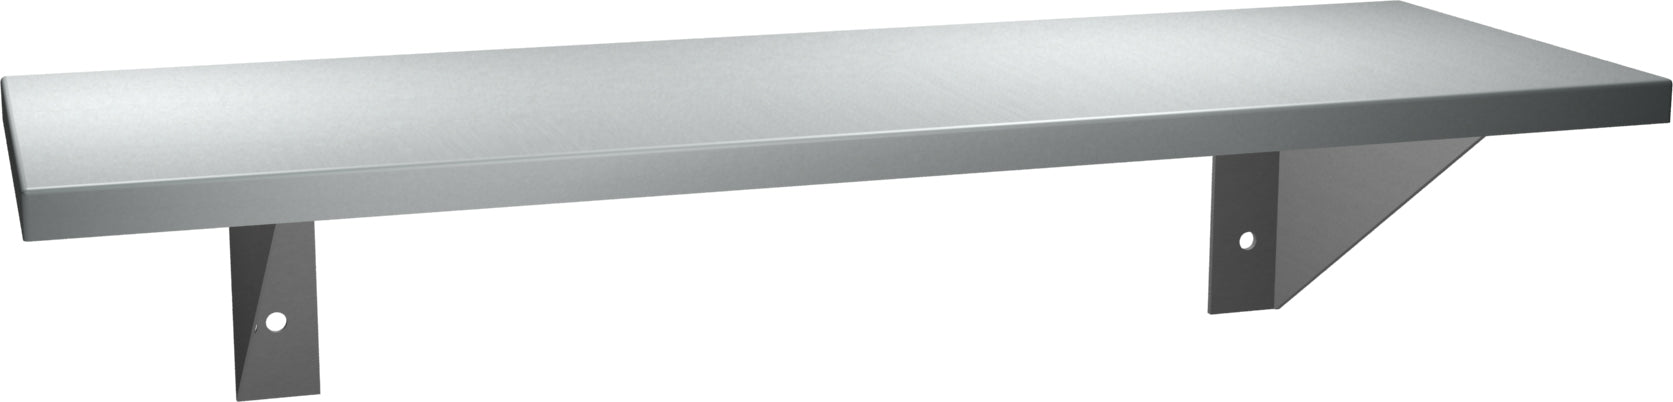 ASI 0692-612 Shelf, Stainless Steel, 6 X 12 Inch